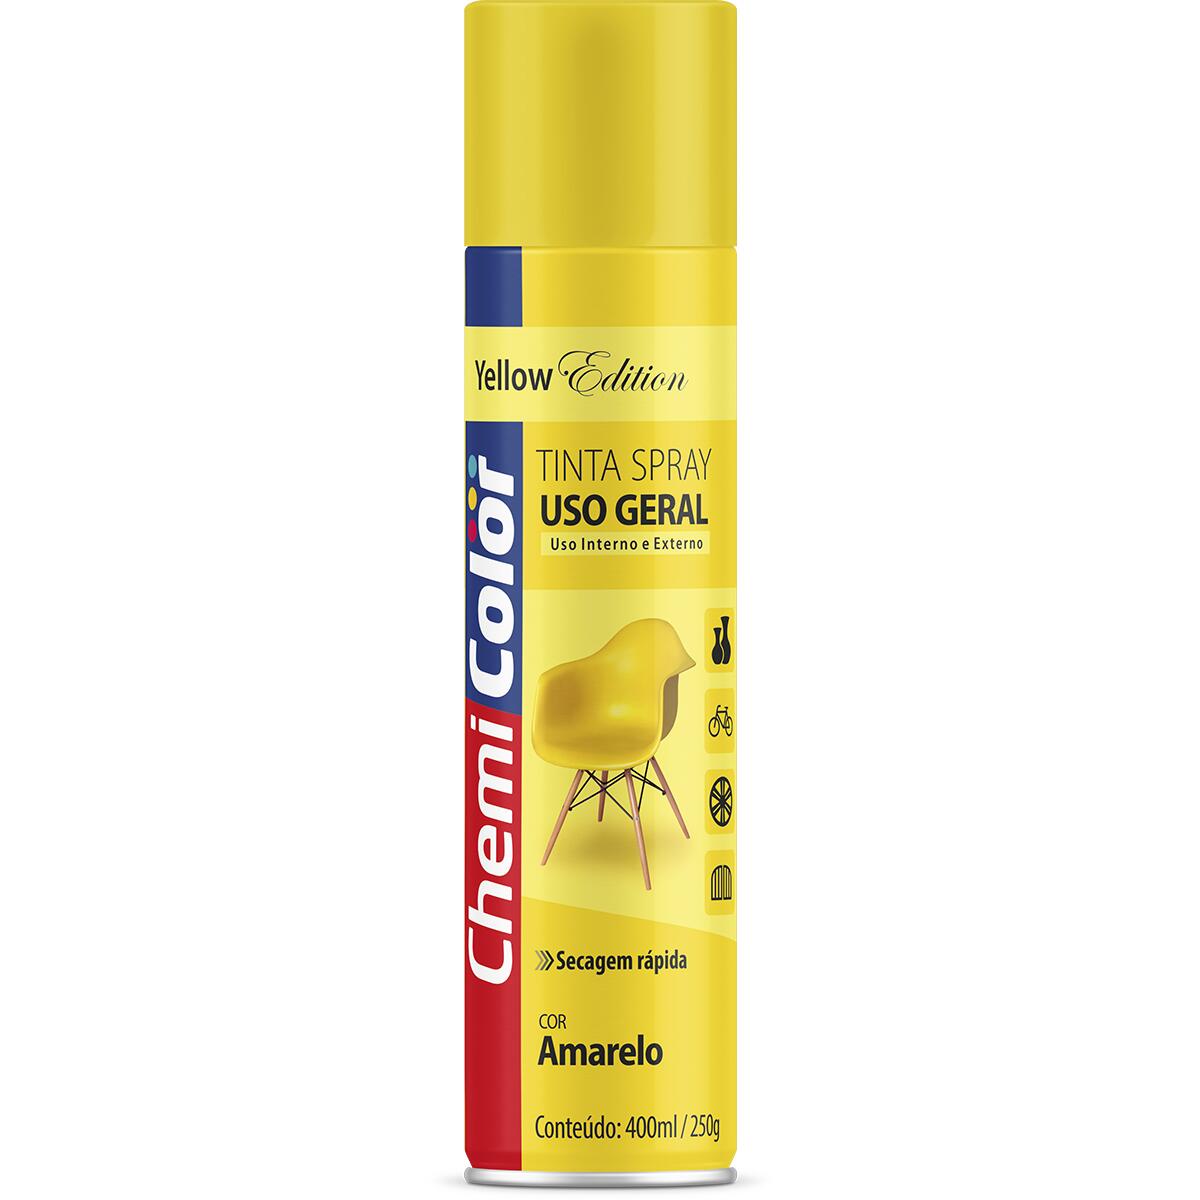 Tinta Spray Chemicolor 400Ml/250G Amarelo